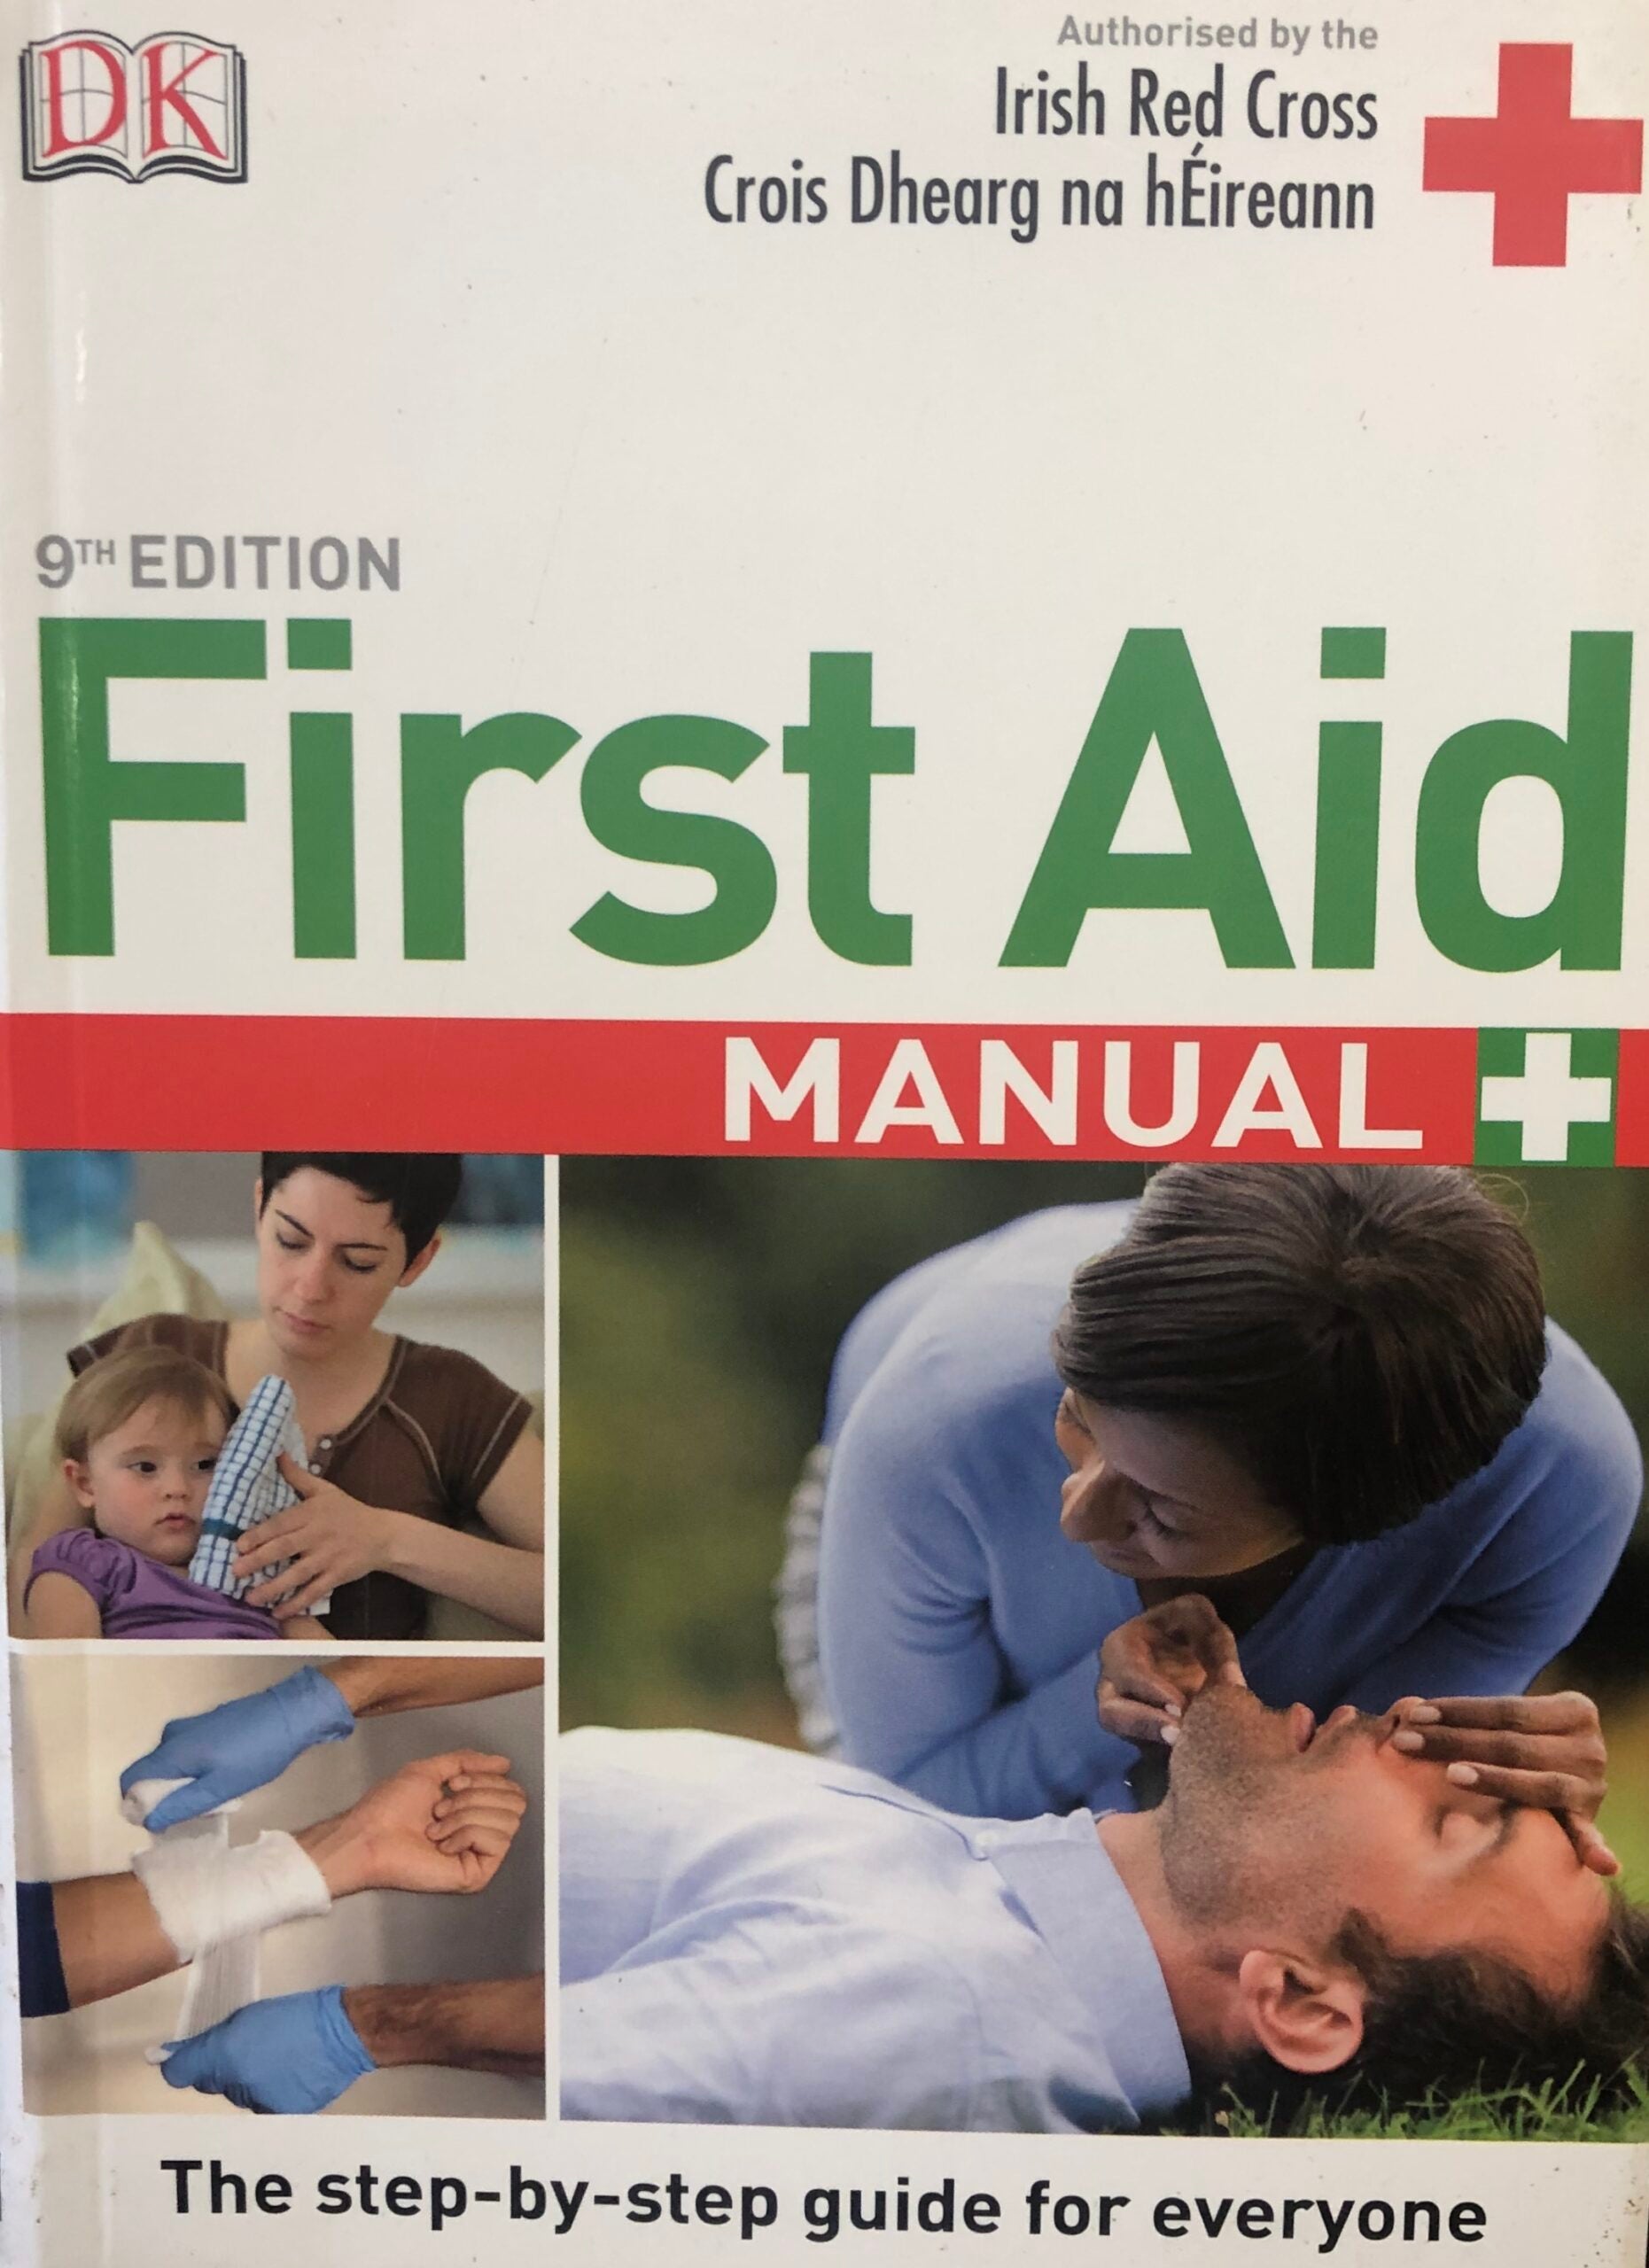 First Aid Manual - Irish Red Cross